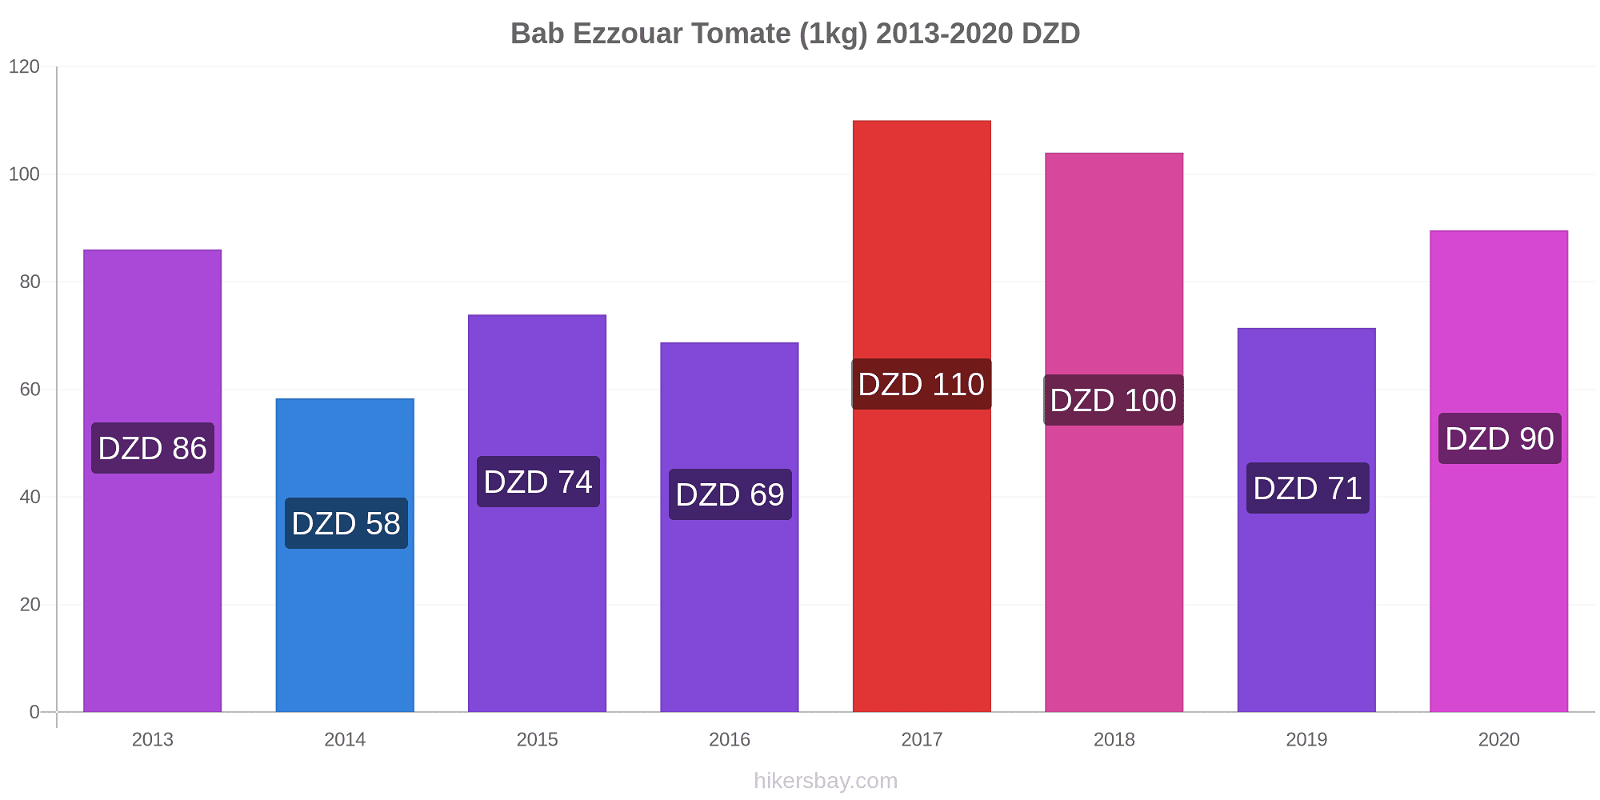 Bab Ezzouar changements de prix Tomate (1kg) hikersbay.com